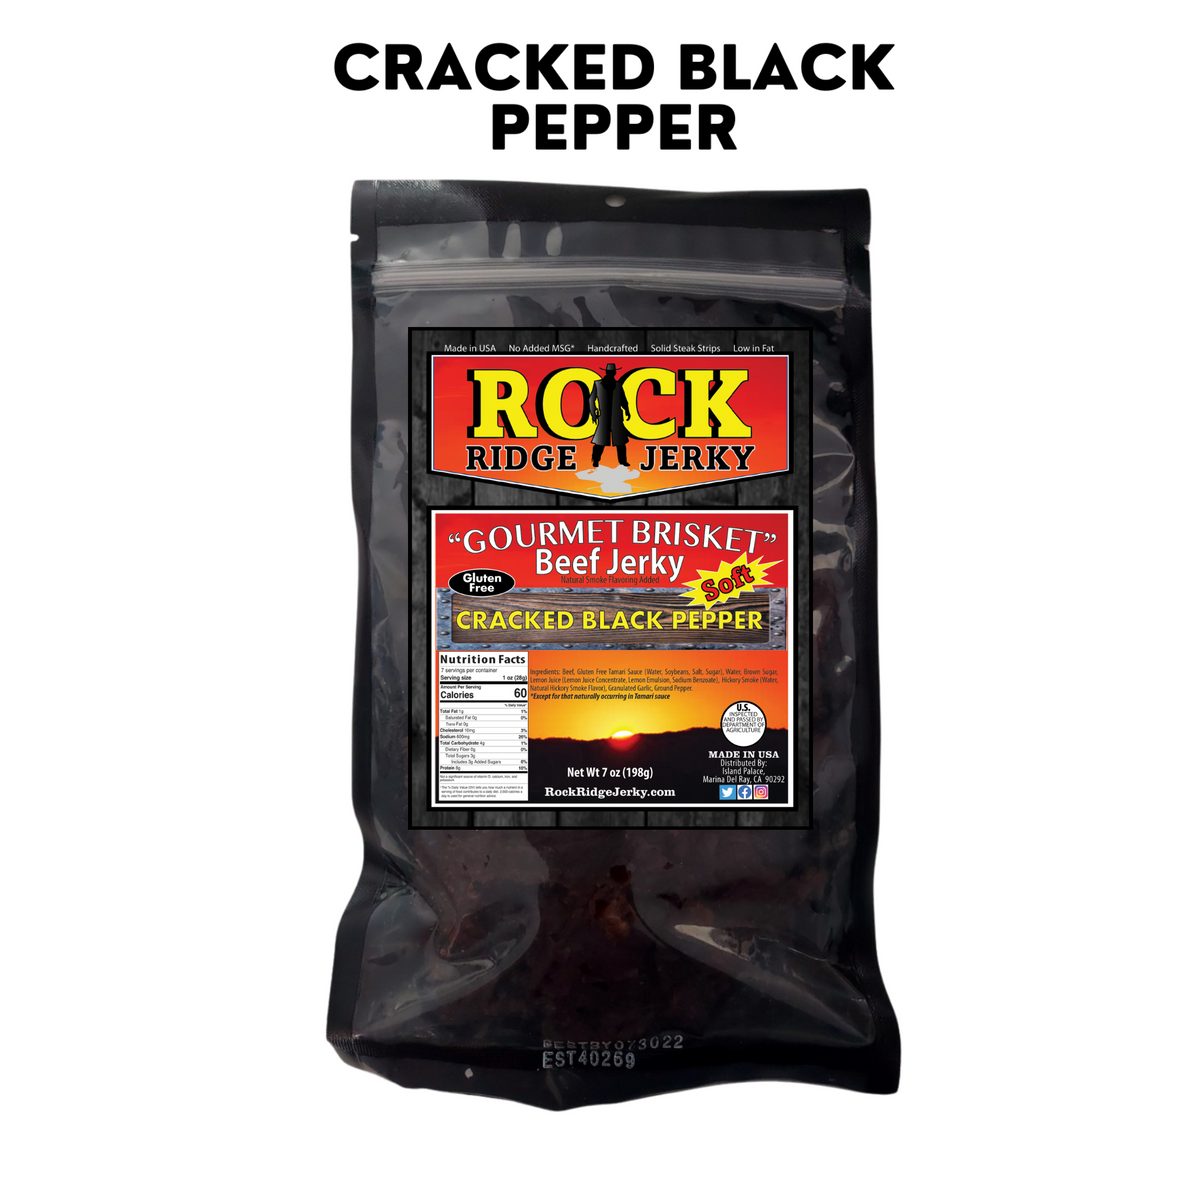 CRACKED BLACK PEPPER brisket beef jerky